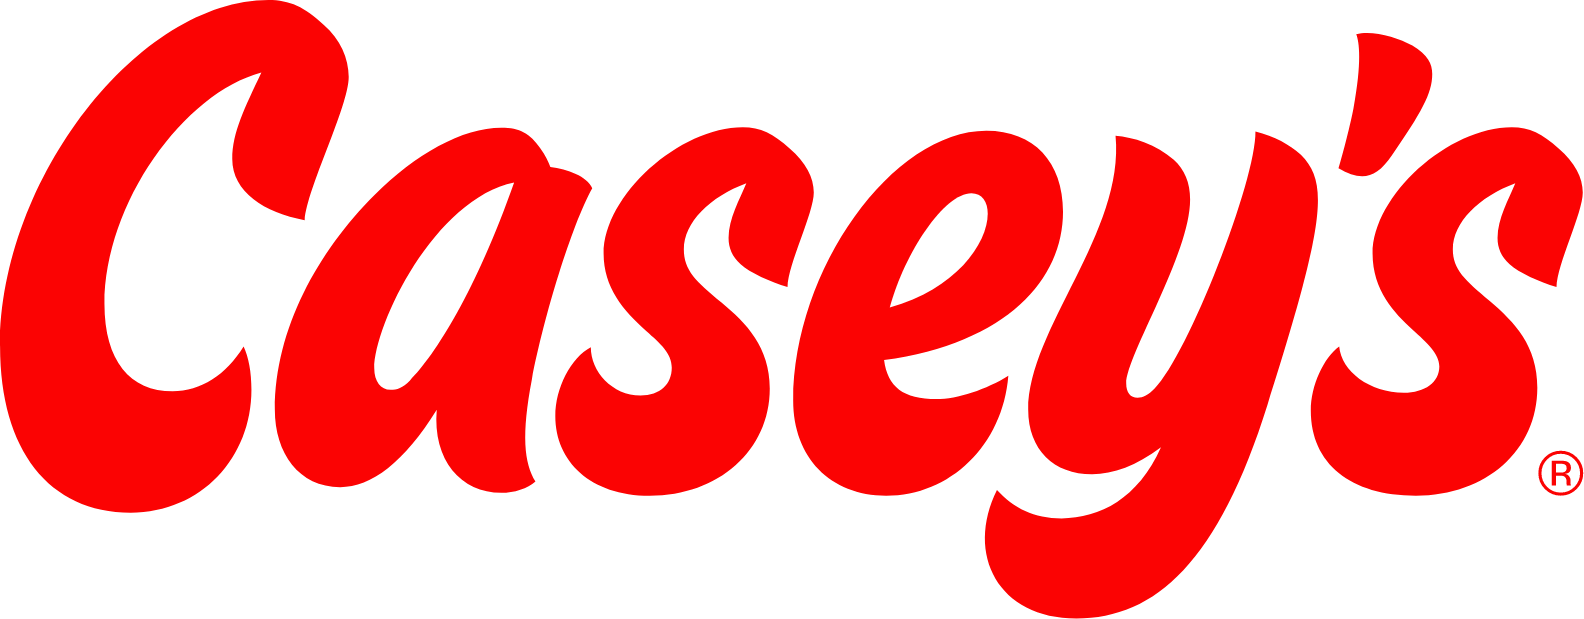 Casey's General Stores
 logo large (transparent PNG)